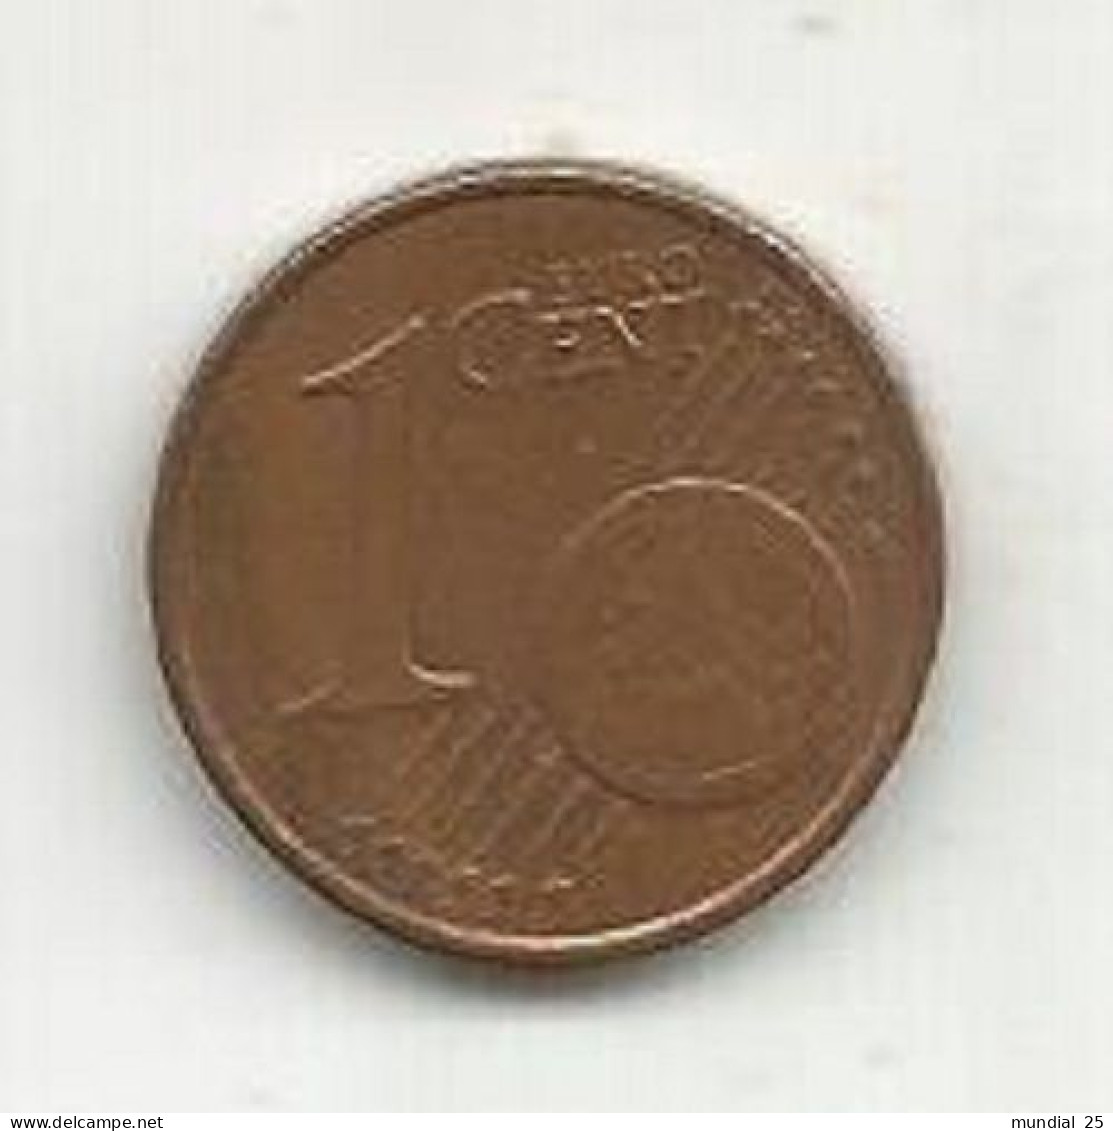 IRELAND 1 EURO CENT 2004 - Ireland